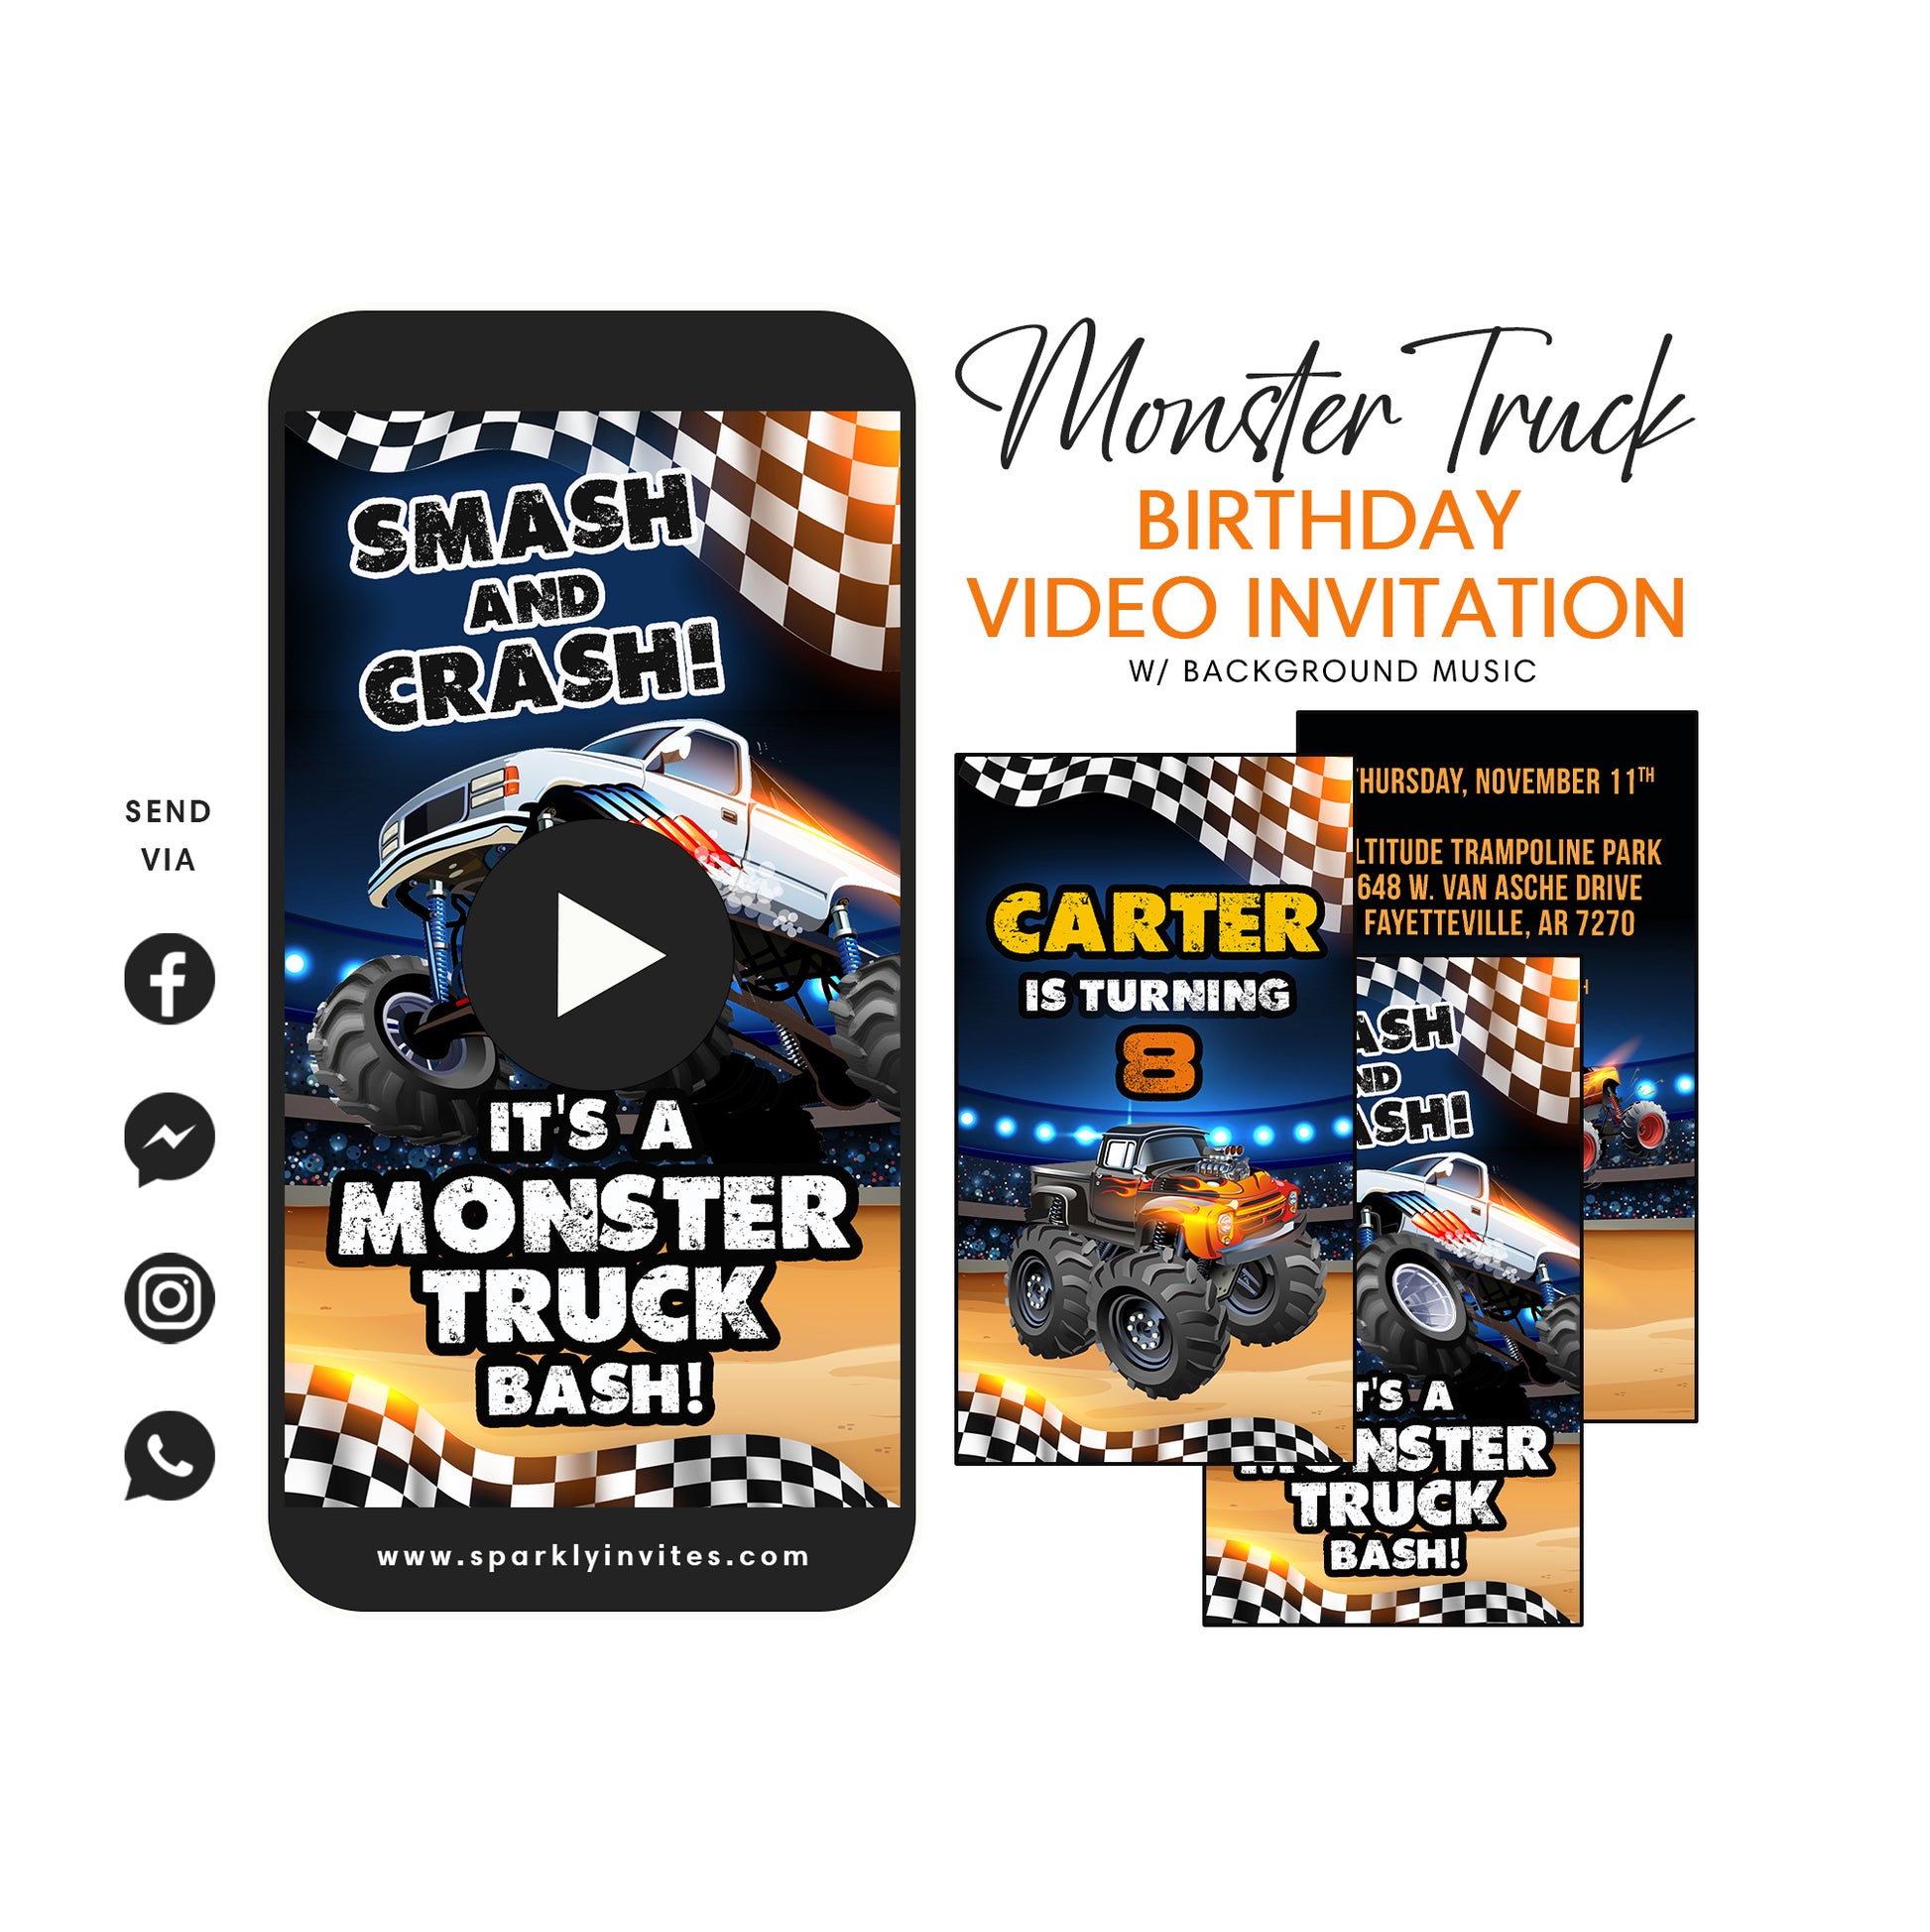 Monster truck video invitation